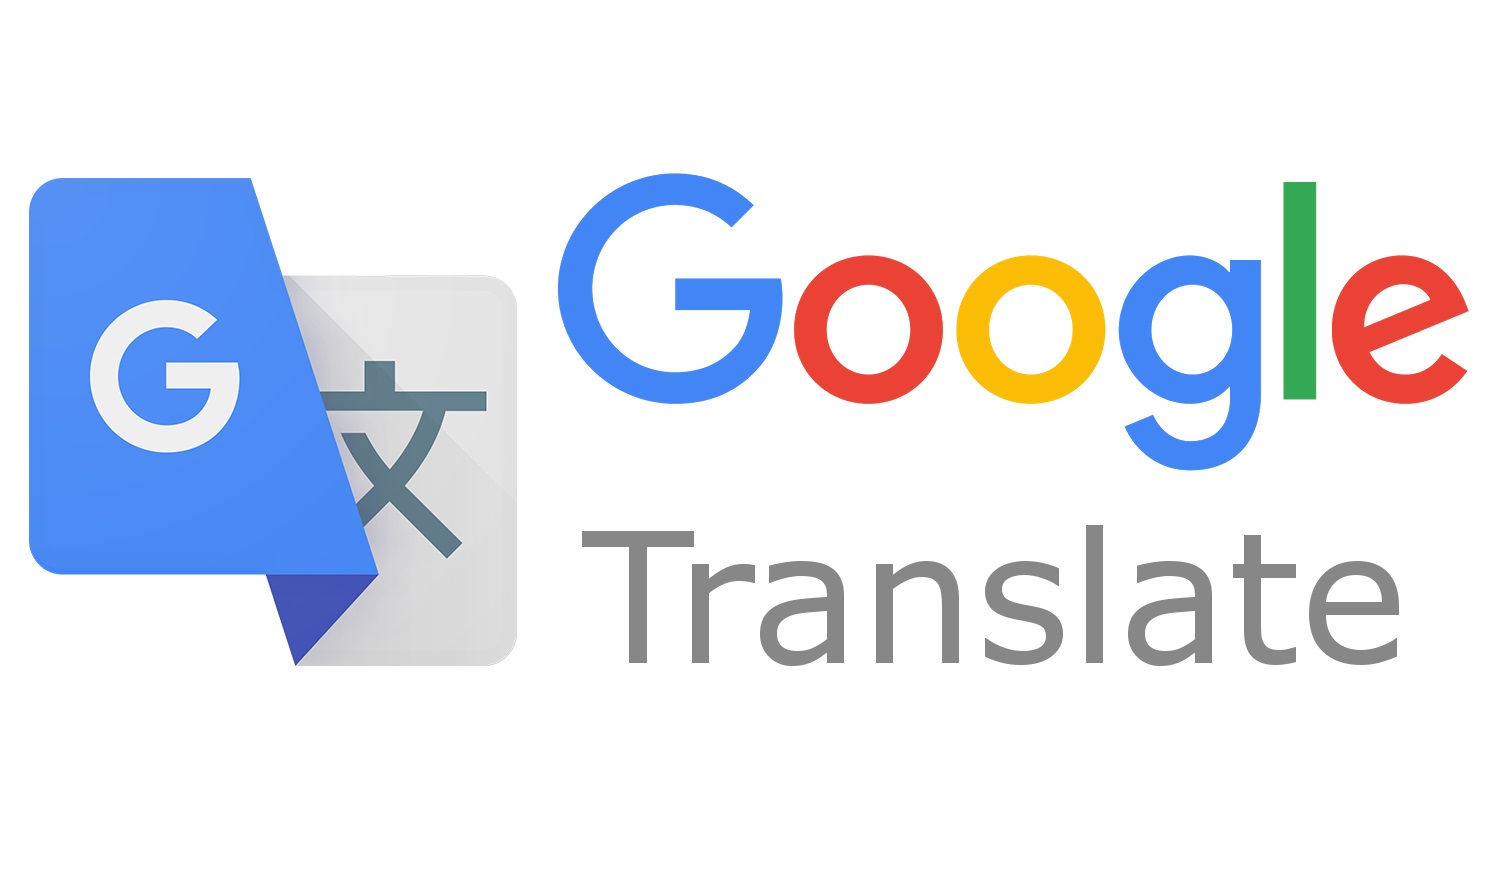 Google Translate ปรับปรุงการแปลภาษาให้ดีขึ้นด้วยระบบ AI  แปลทั้งประโยคได้ดีขึ้น พร้อมใช้งานแบบออฟไลน์ | DroidSans